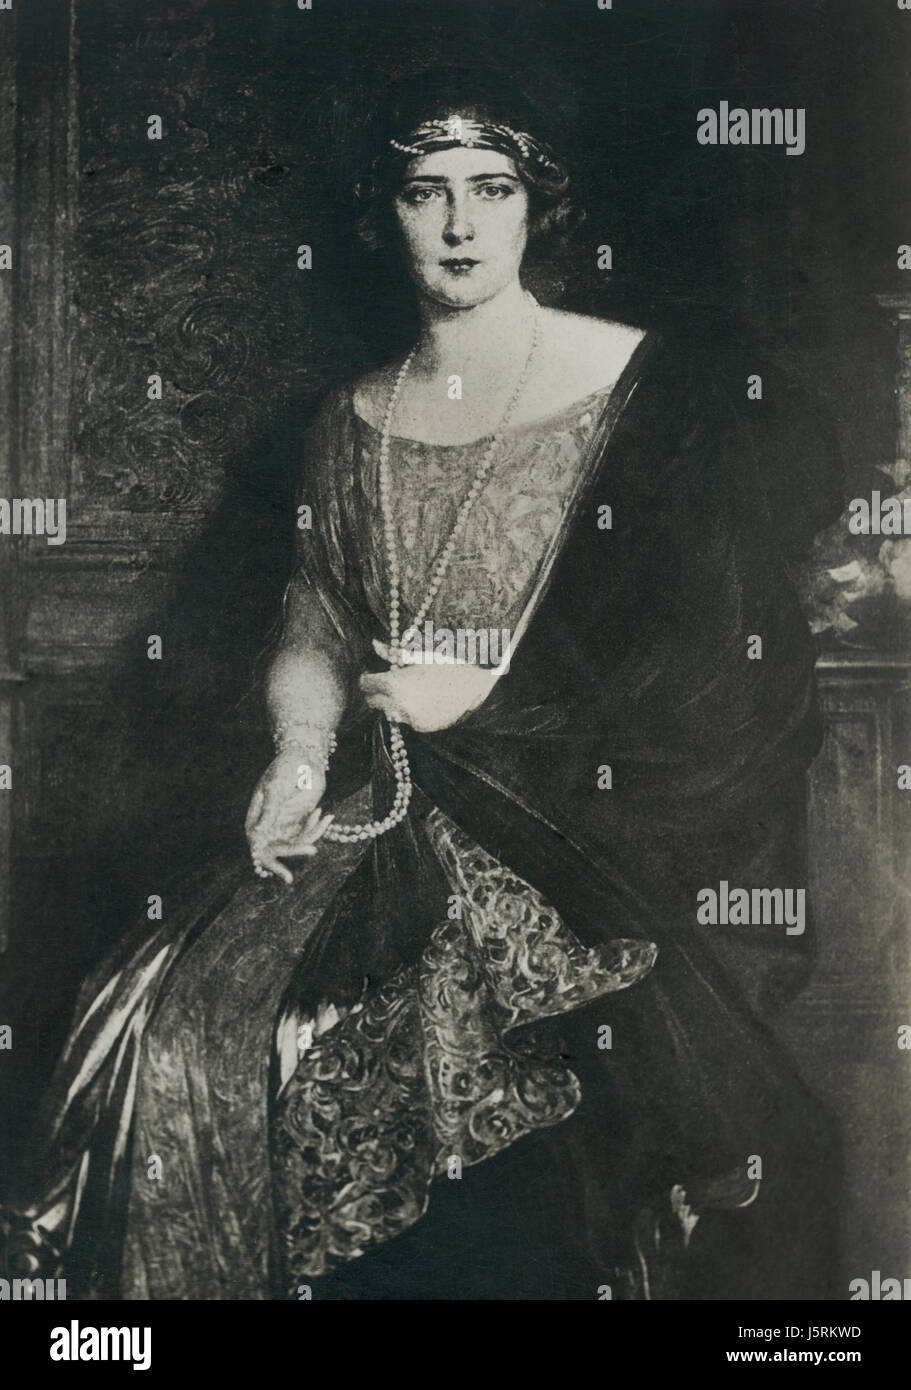 Princess Maria of Romania (1900-61), Queen of Yugoslavia 1922-34, Portrait, 1927 Stock Photo